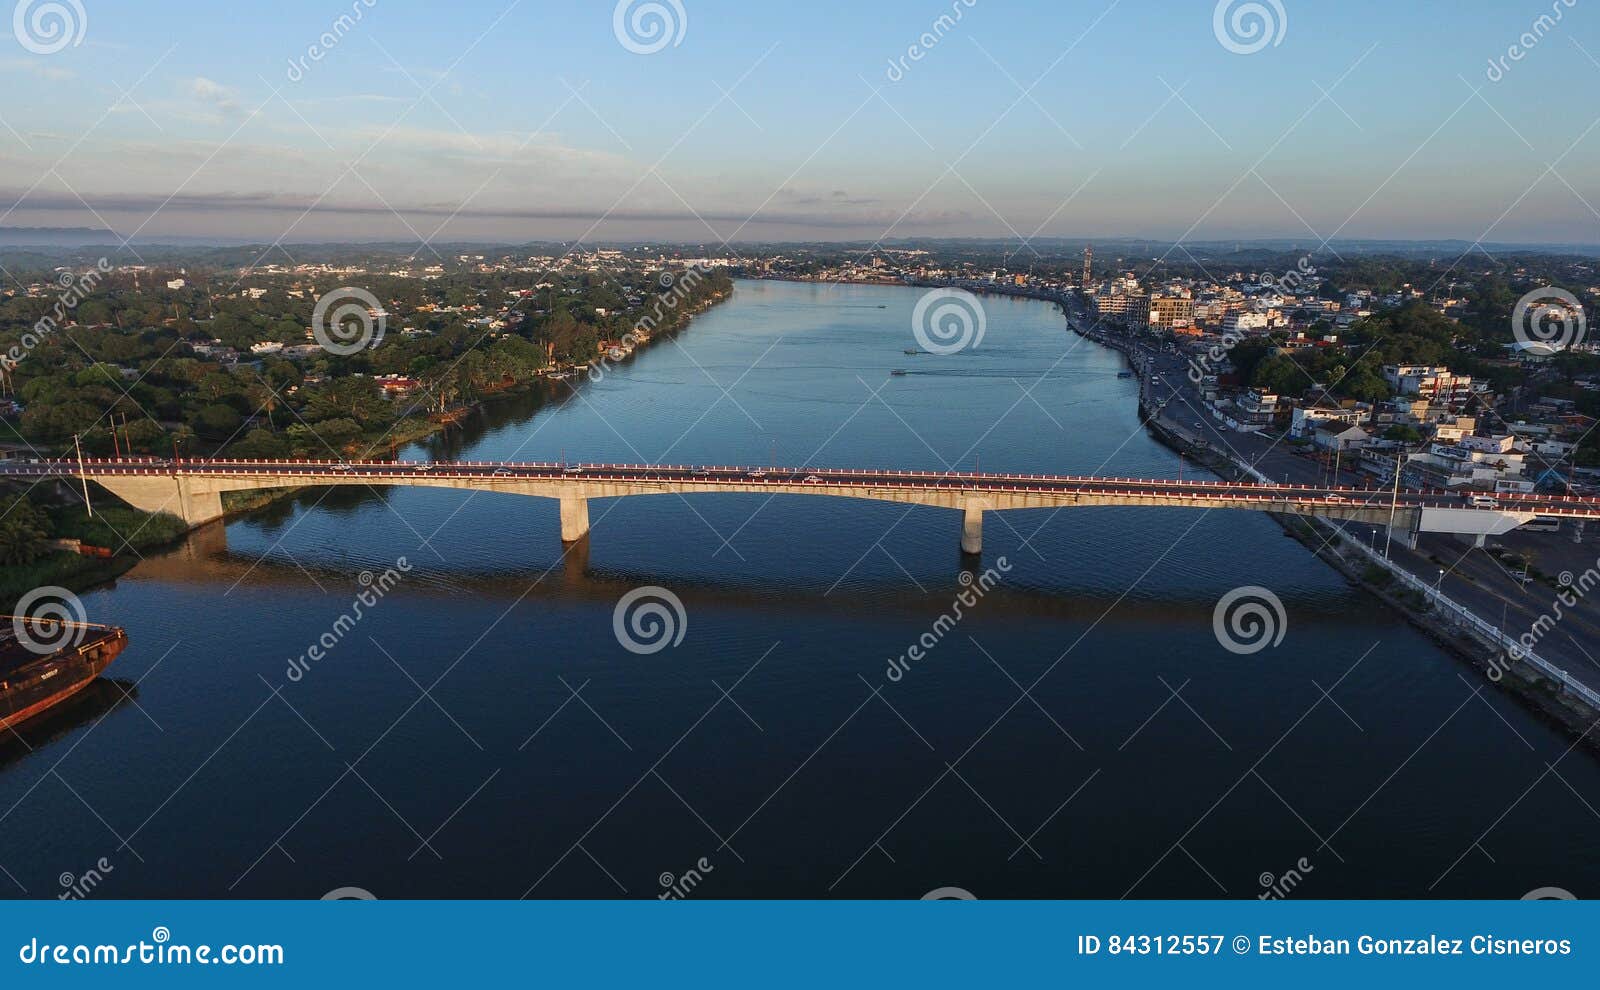 bridge of the city of veracruz seen from a dron